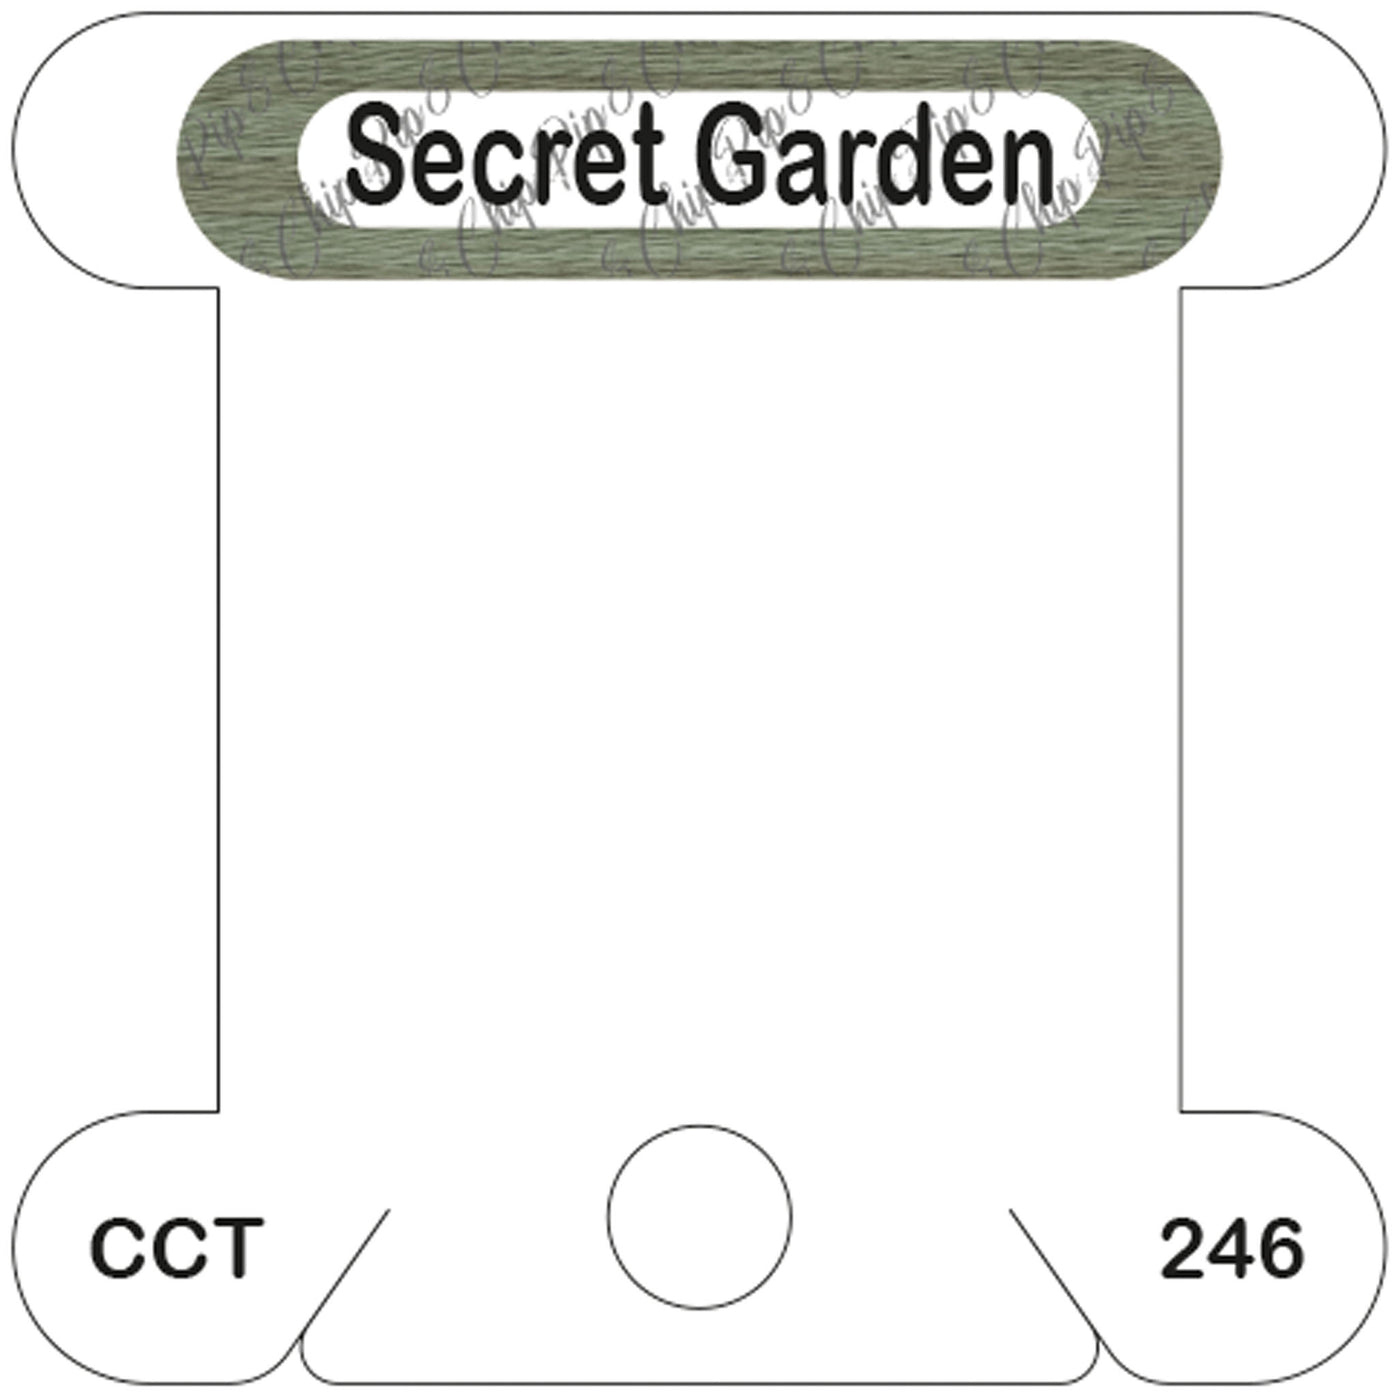 Classic Colorworks Secret Garden acrylic bobbin